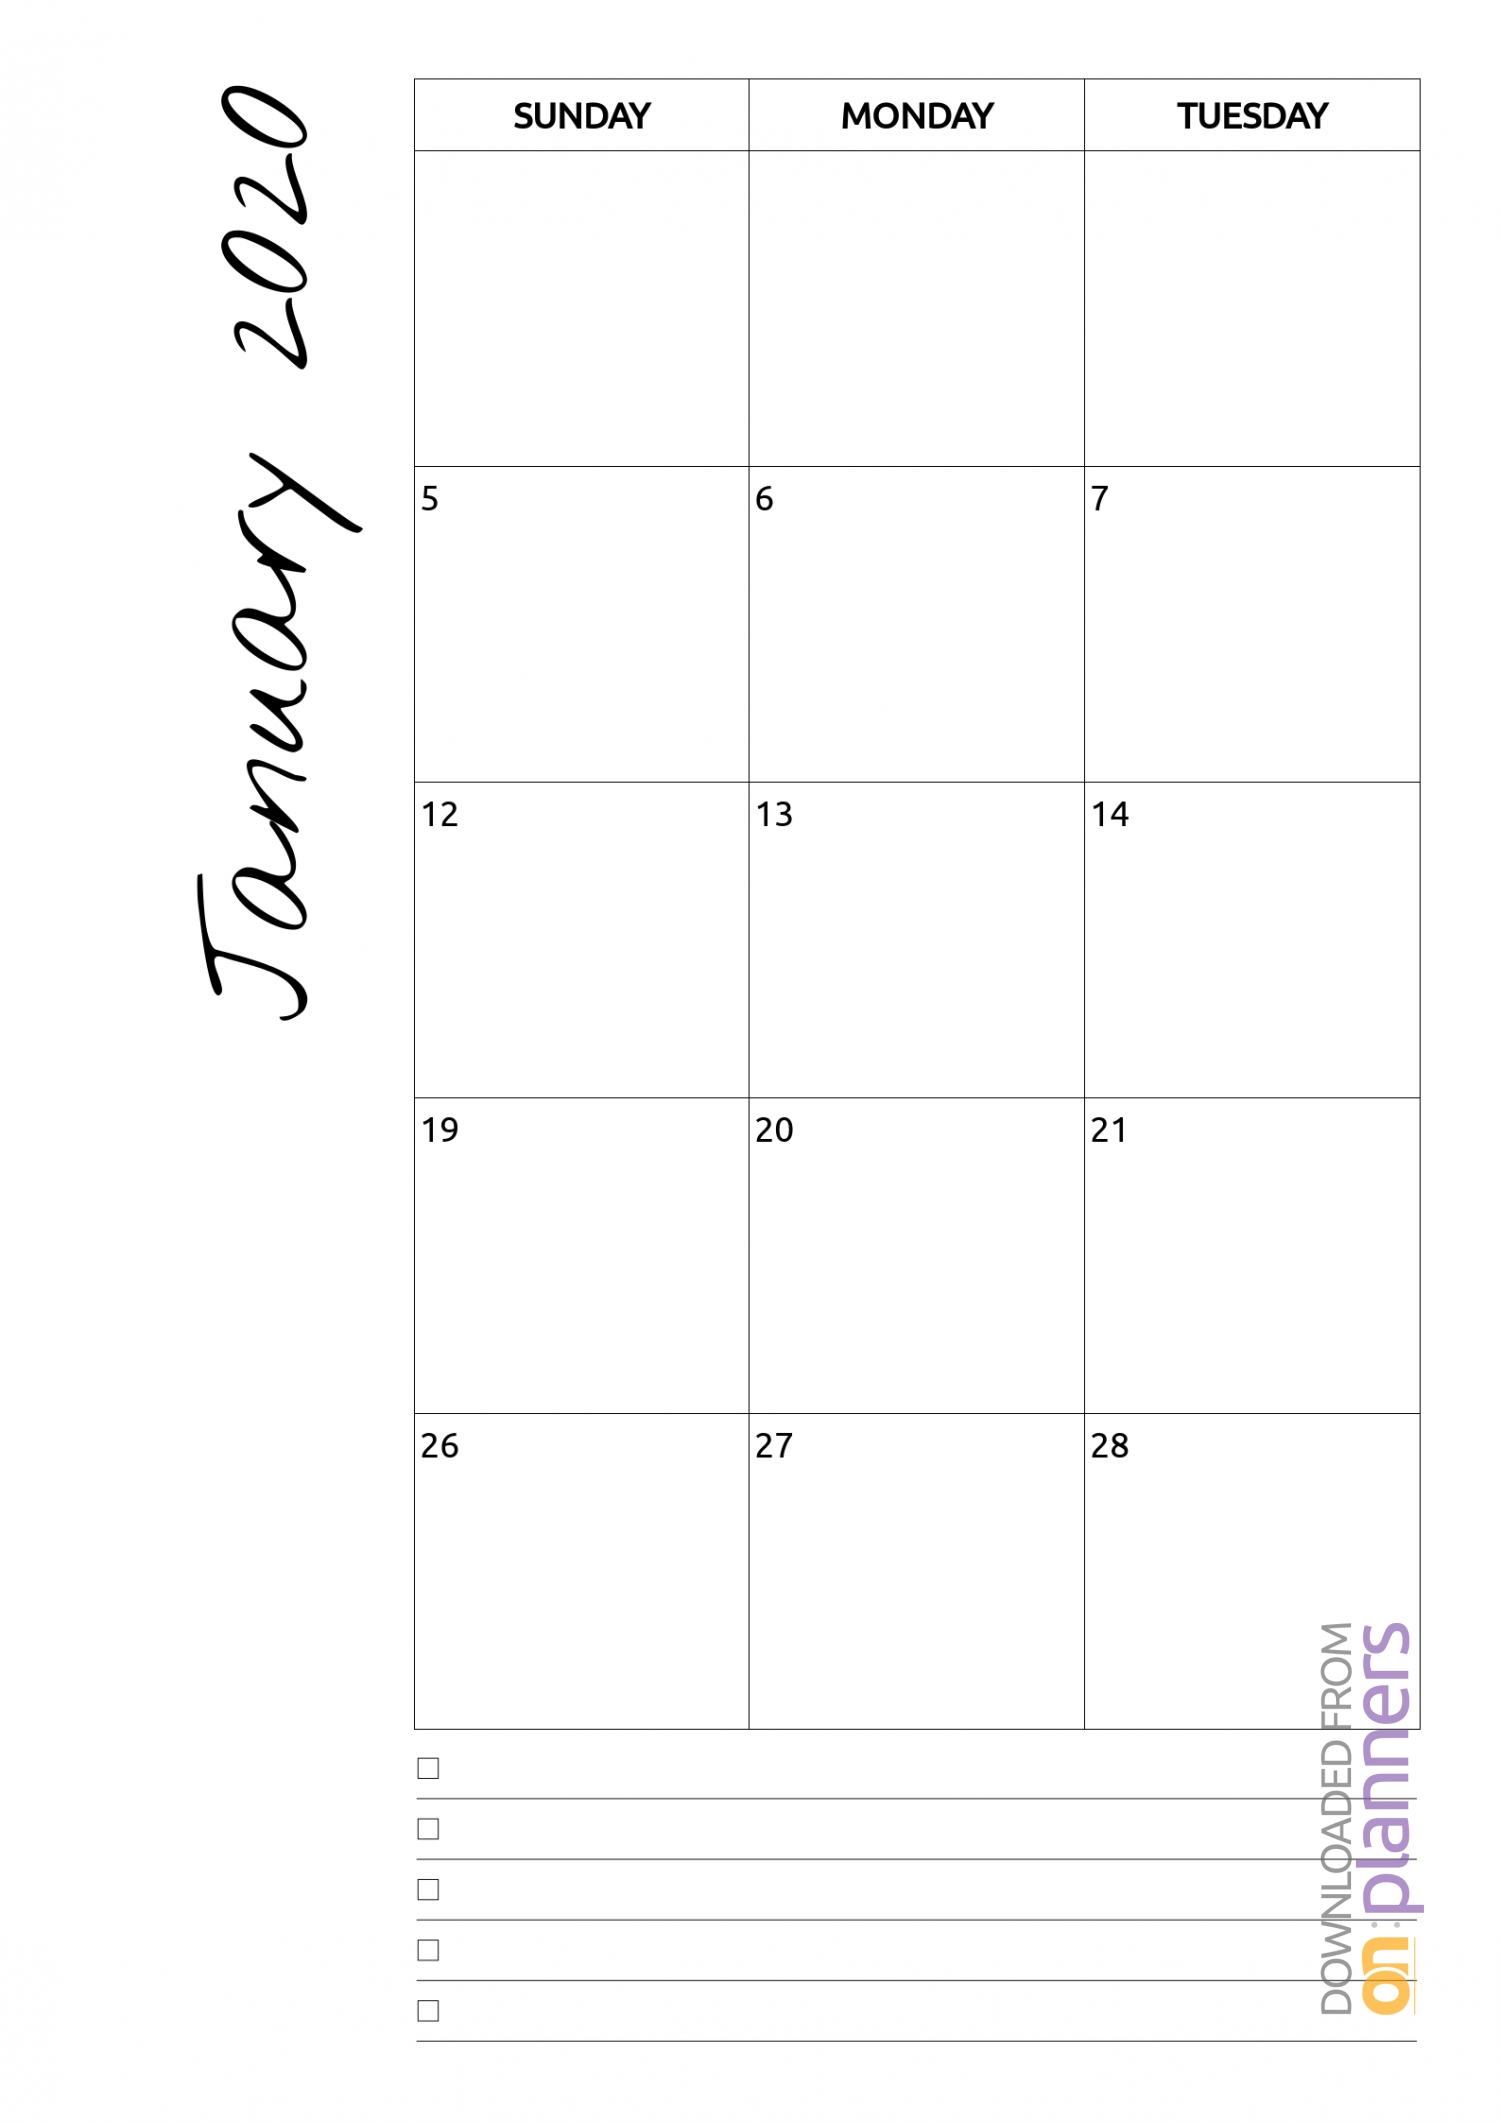 8 X 10 Prinable Blank Monthly Calendar | Calendar Template ...